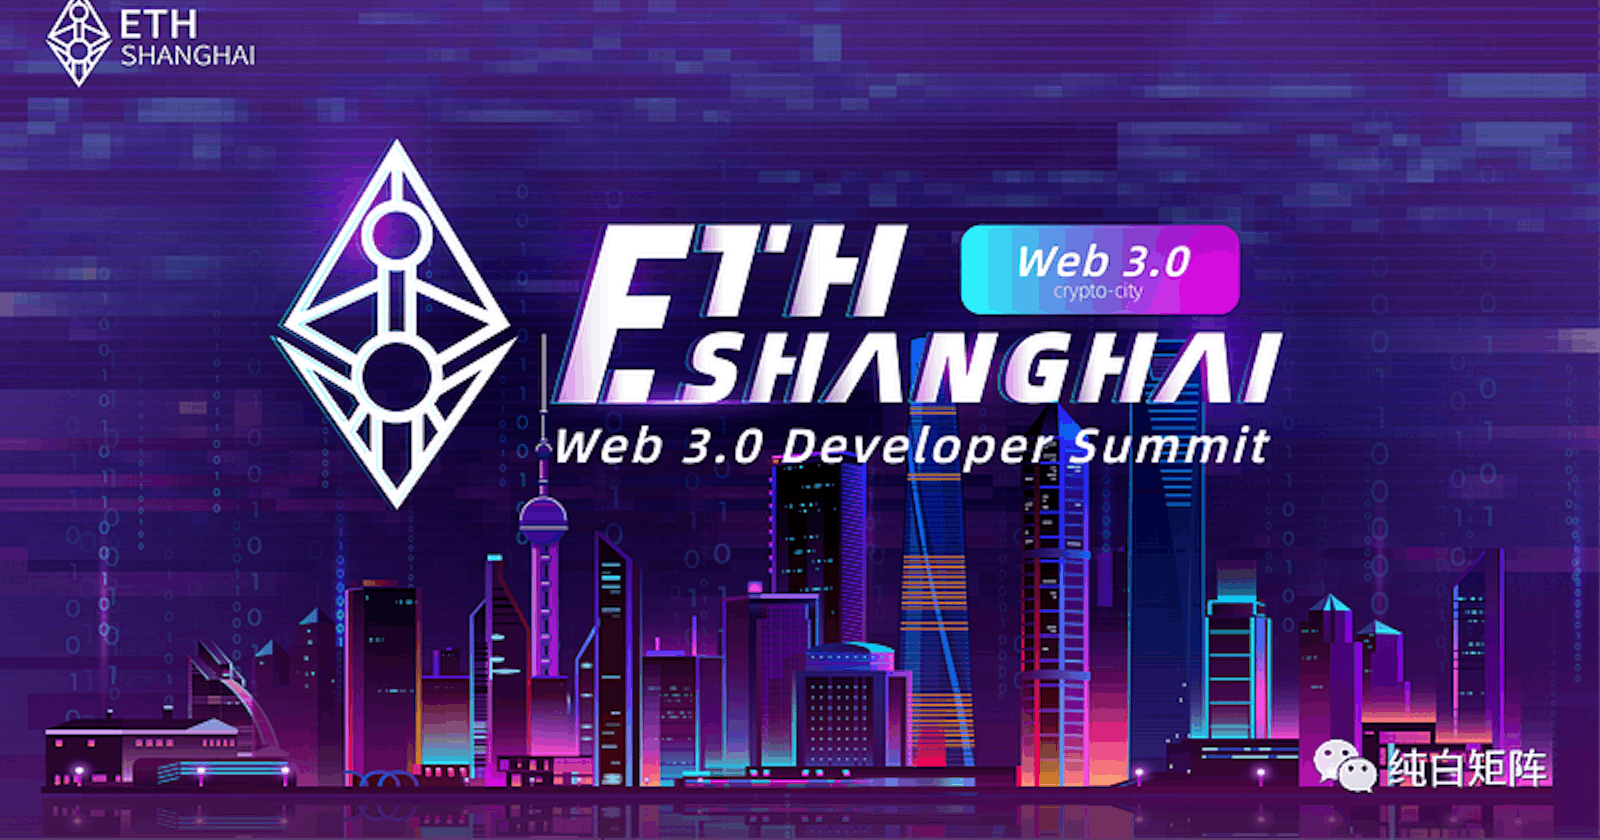 The ETH Shanghai Web3.0